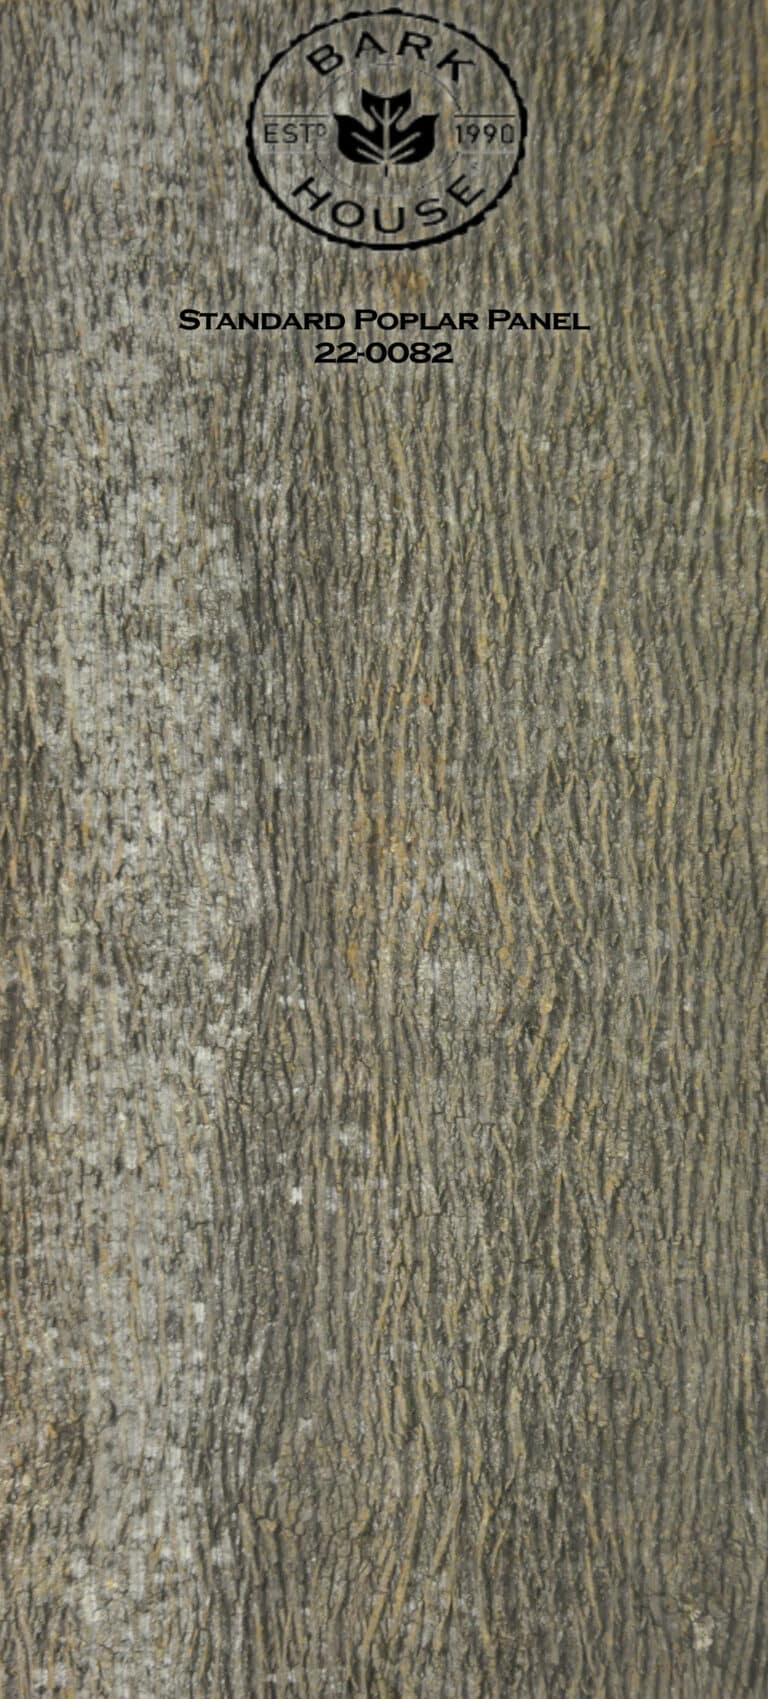 Bark House poplar bark panel SKU POPP-STD-22-0082